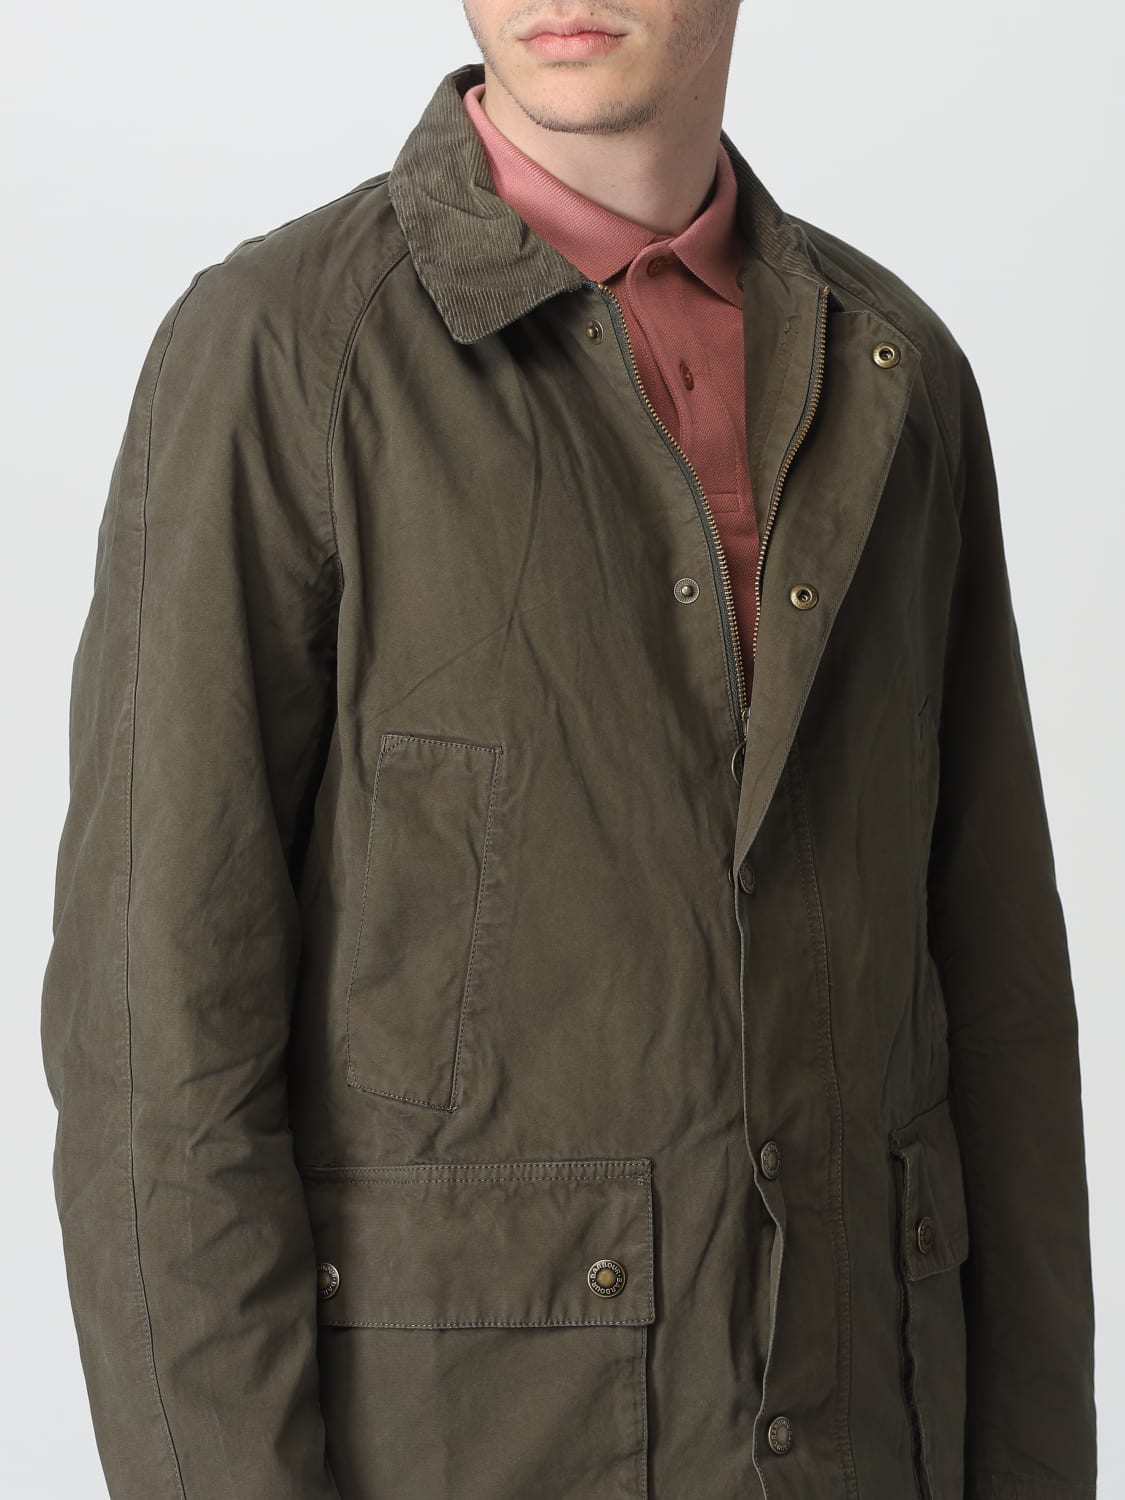 BARBOUR: jacket for man - Military | Barbour jacket MCA0792 online at ...